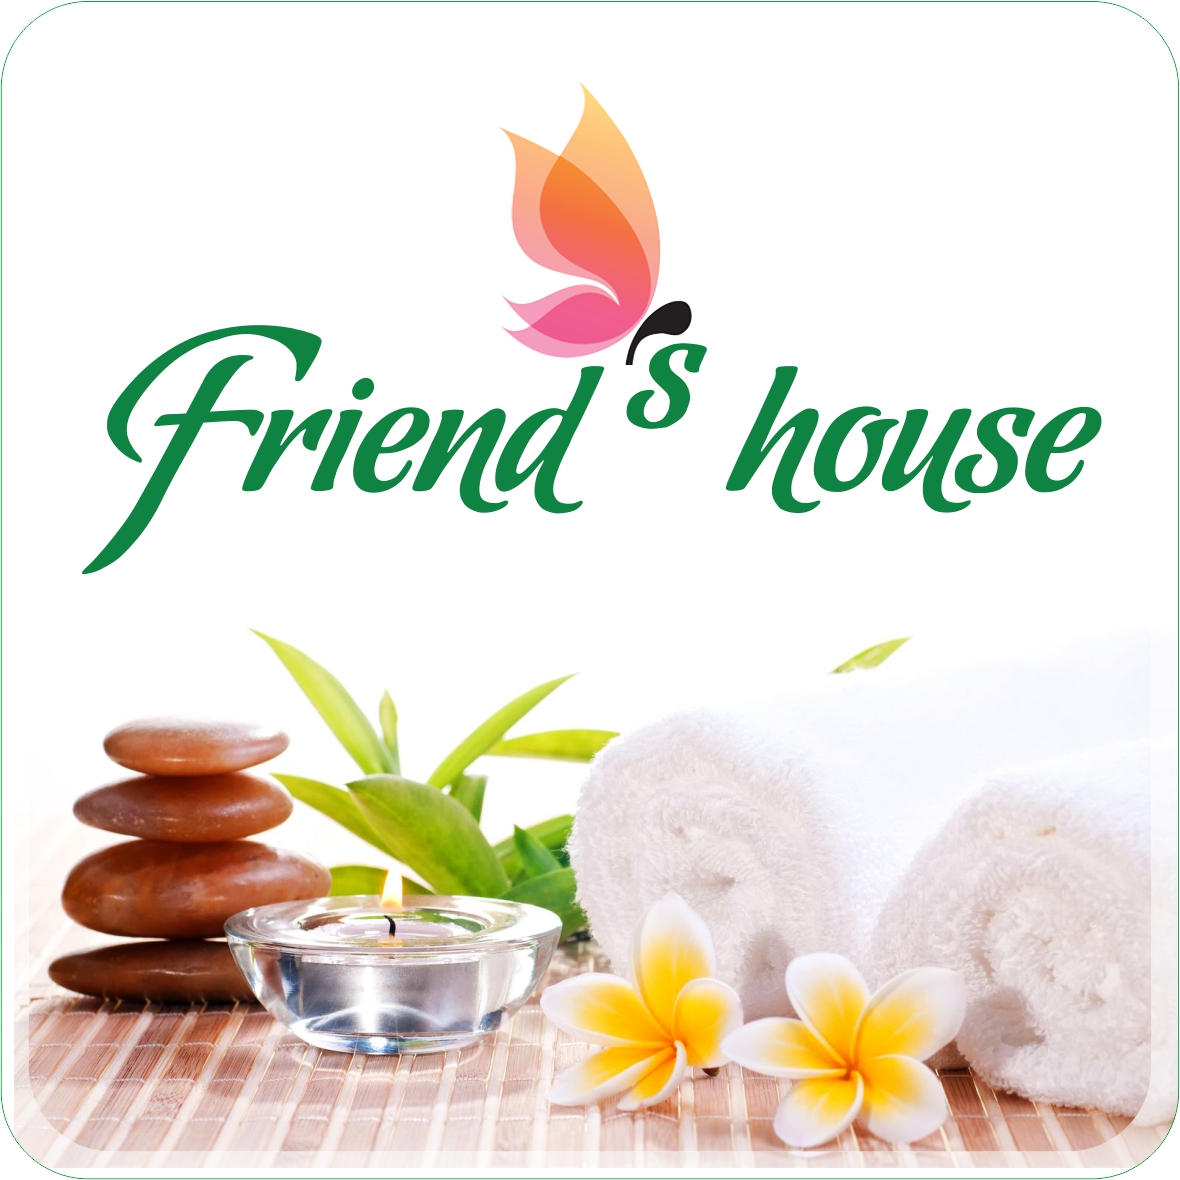 Friend’s House Spa